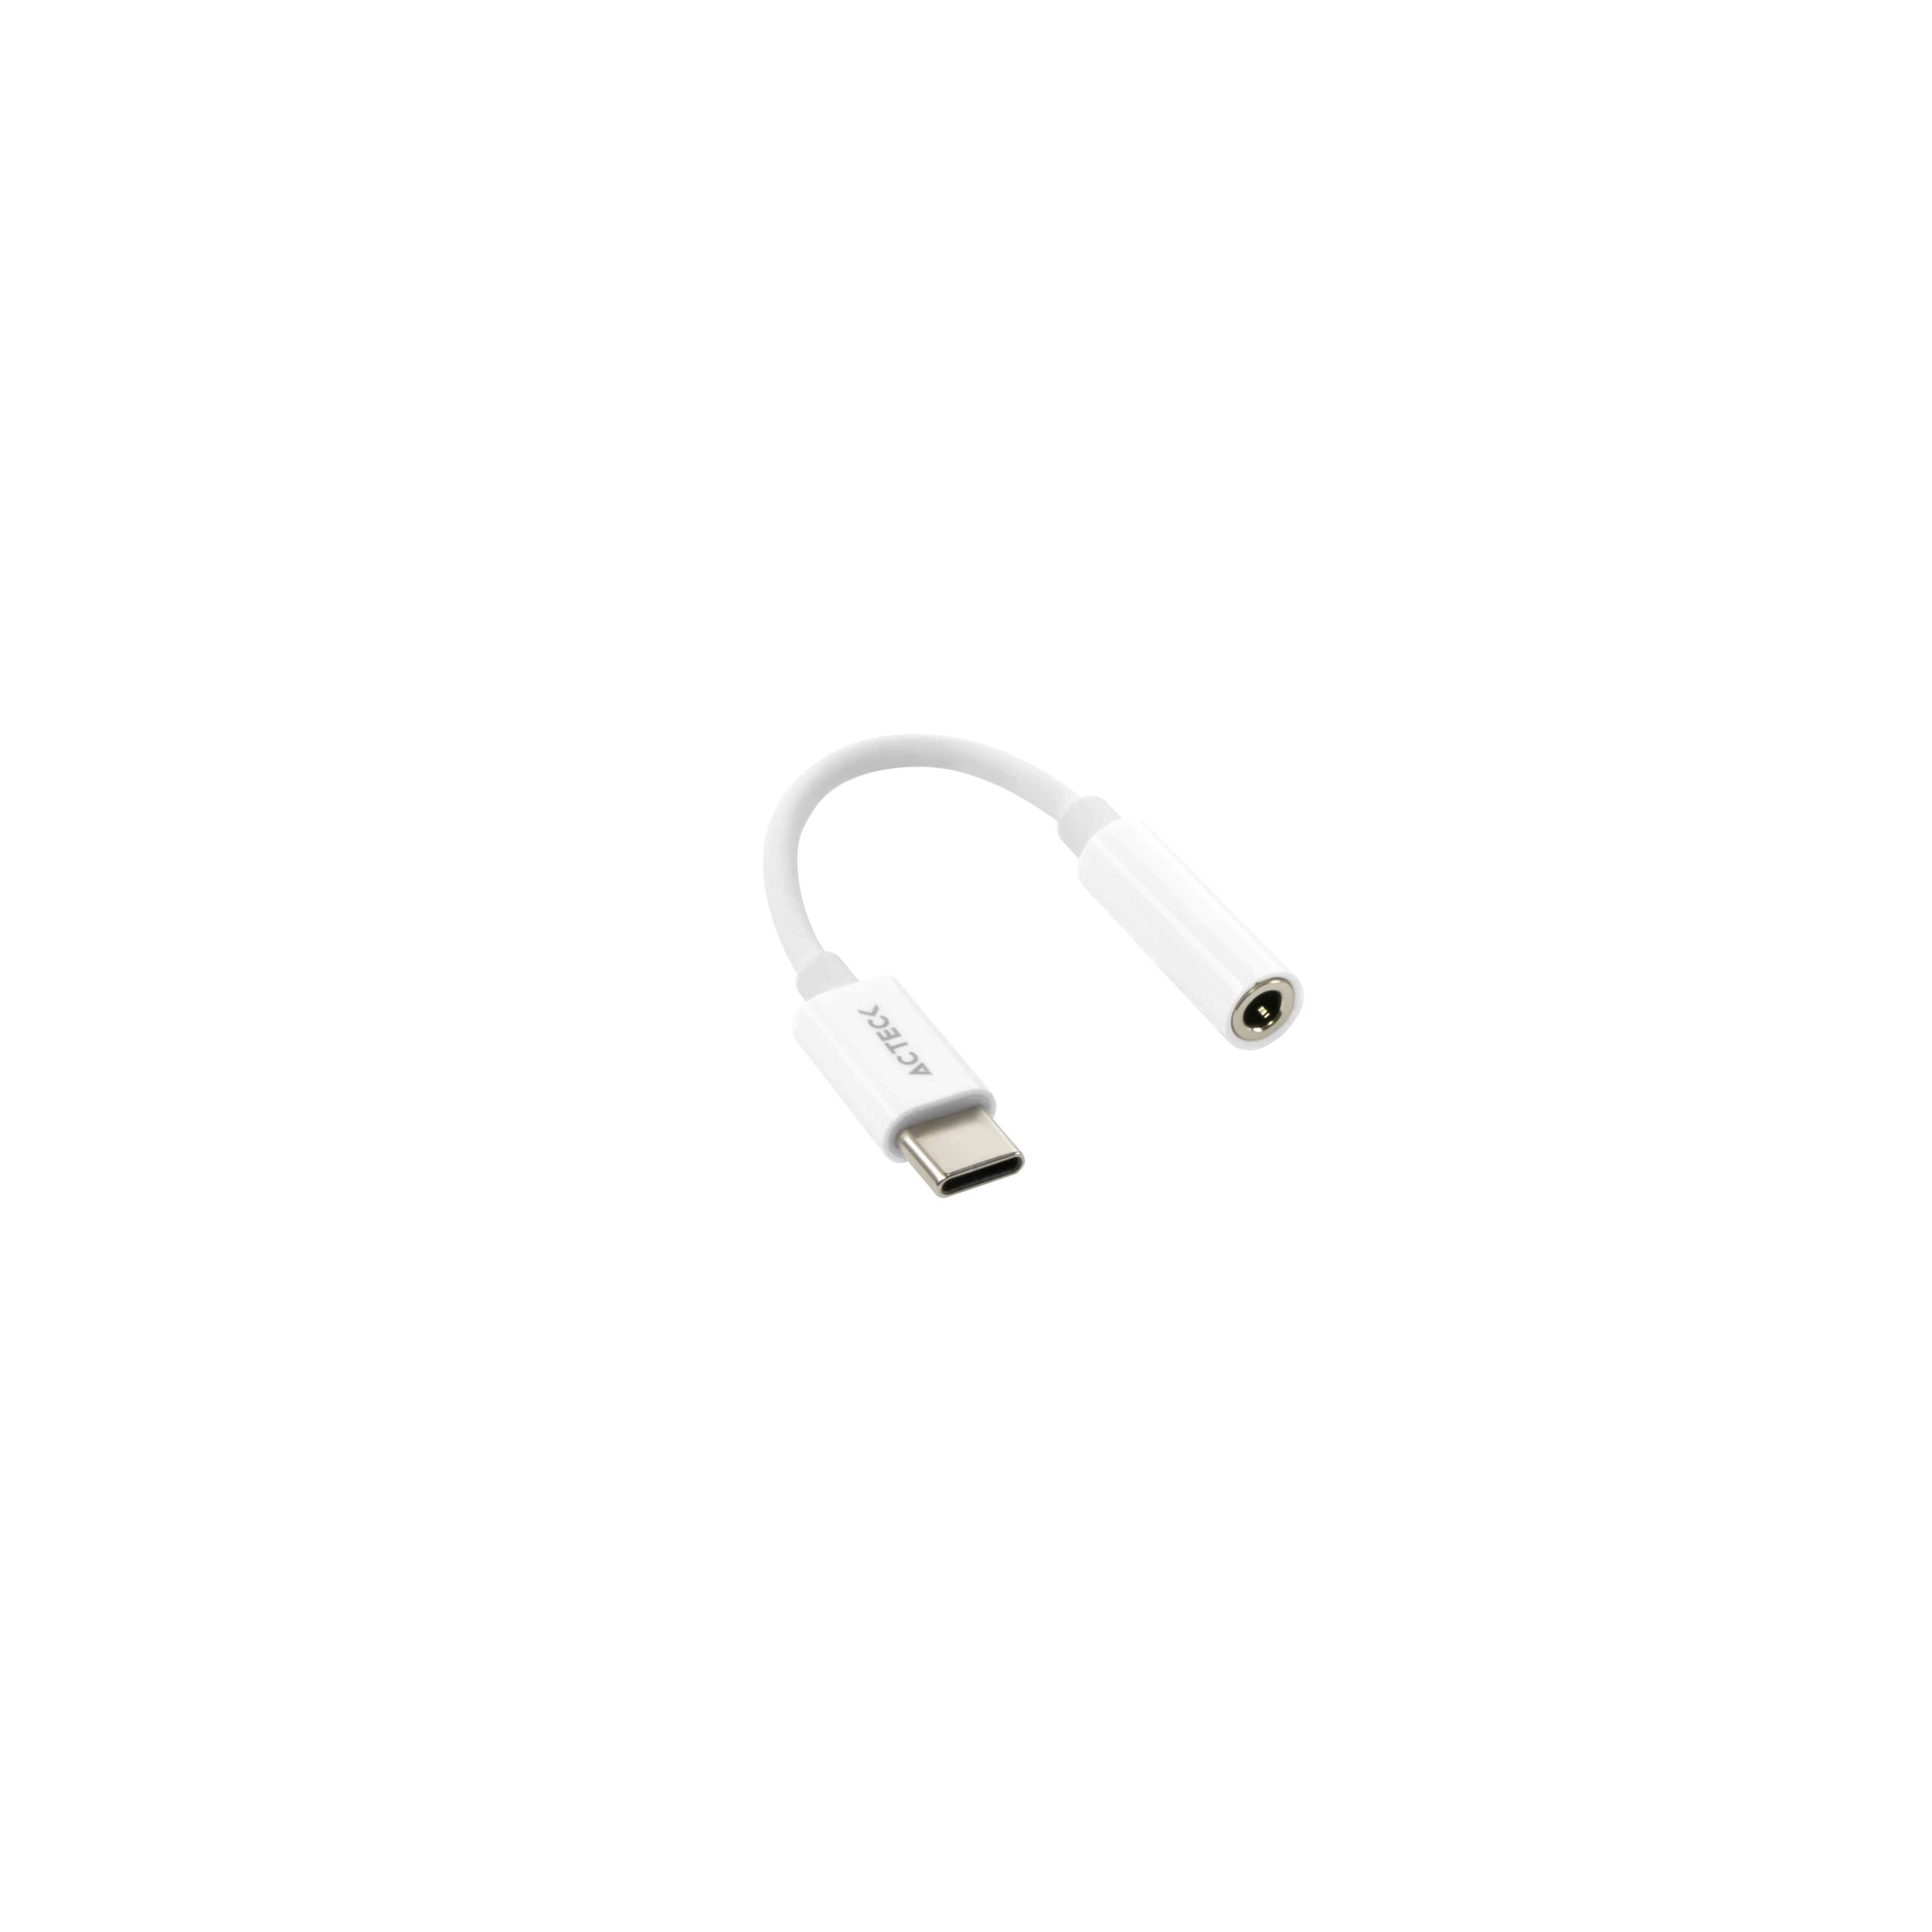 Adaptador USB C a Jack 3.5mm | Shift Plus AA405 | Para Auriculares